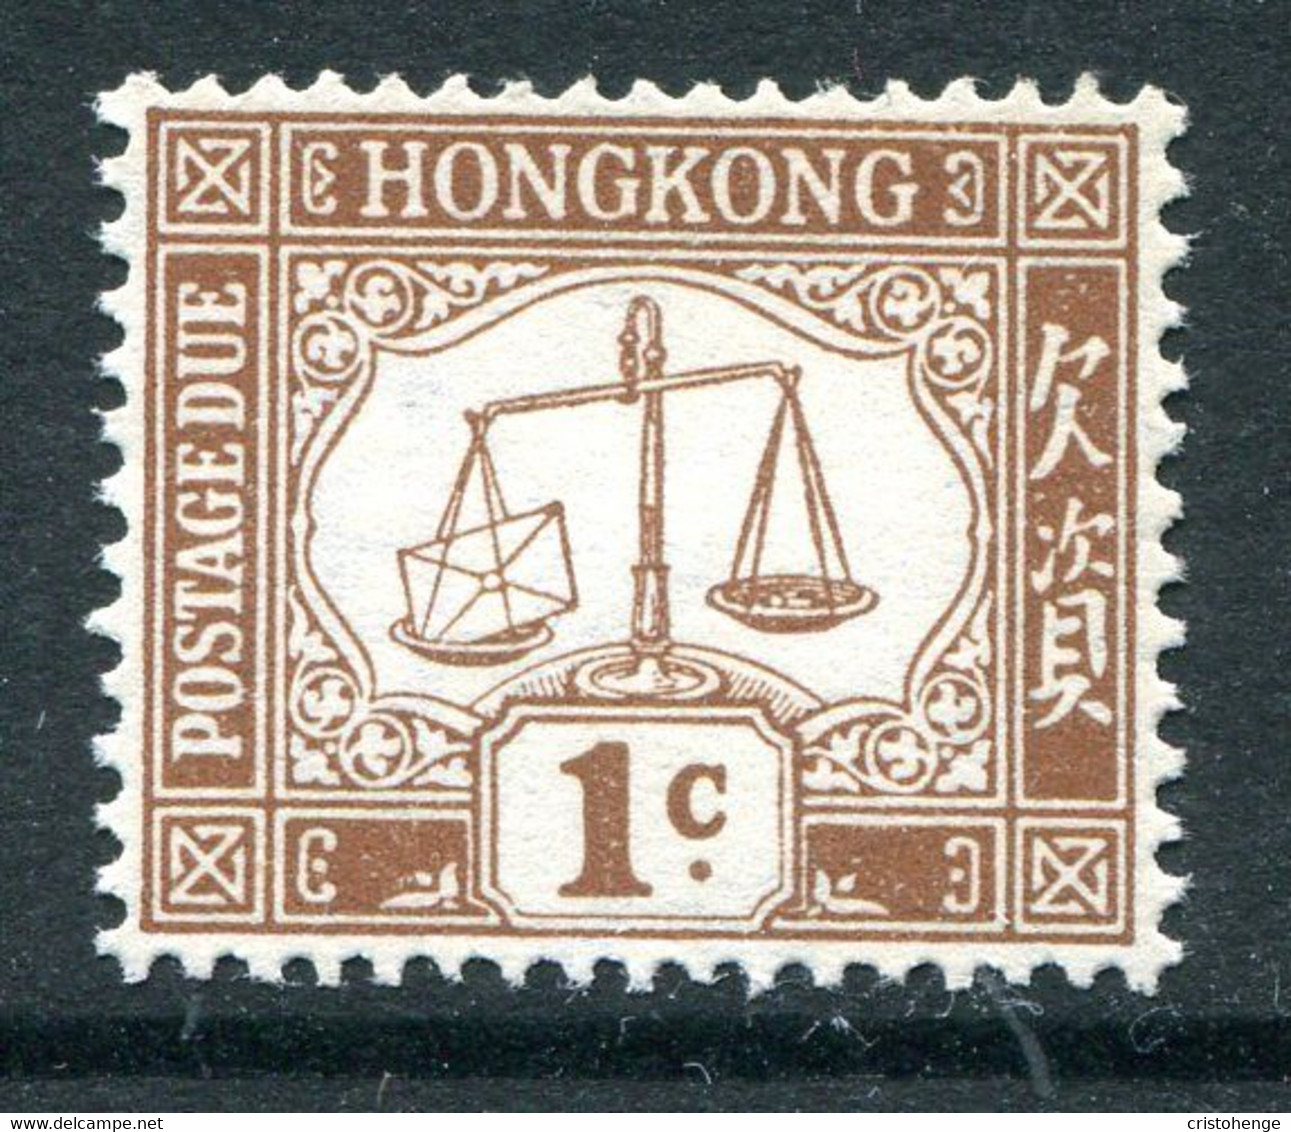 Hong Kong 1923-56 Postage Dues - 1c Brown - Wmk. Sideways - MNH (SG D1a) - Portomarken